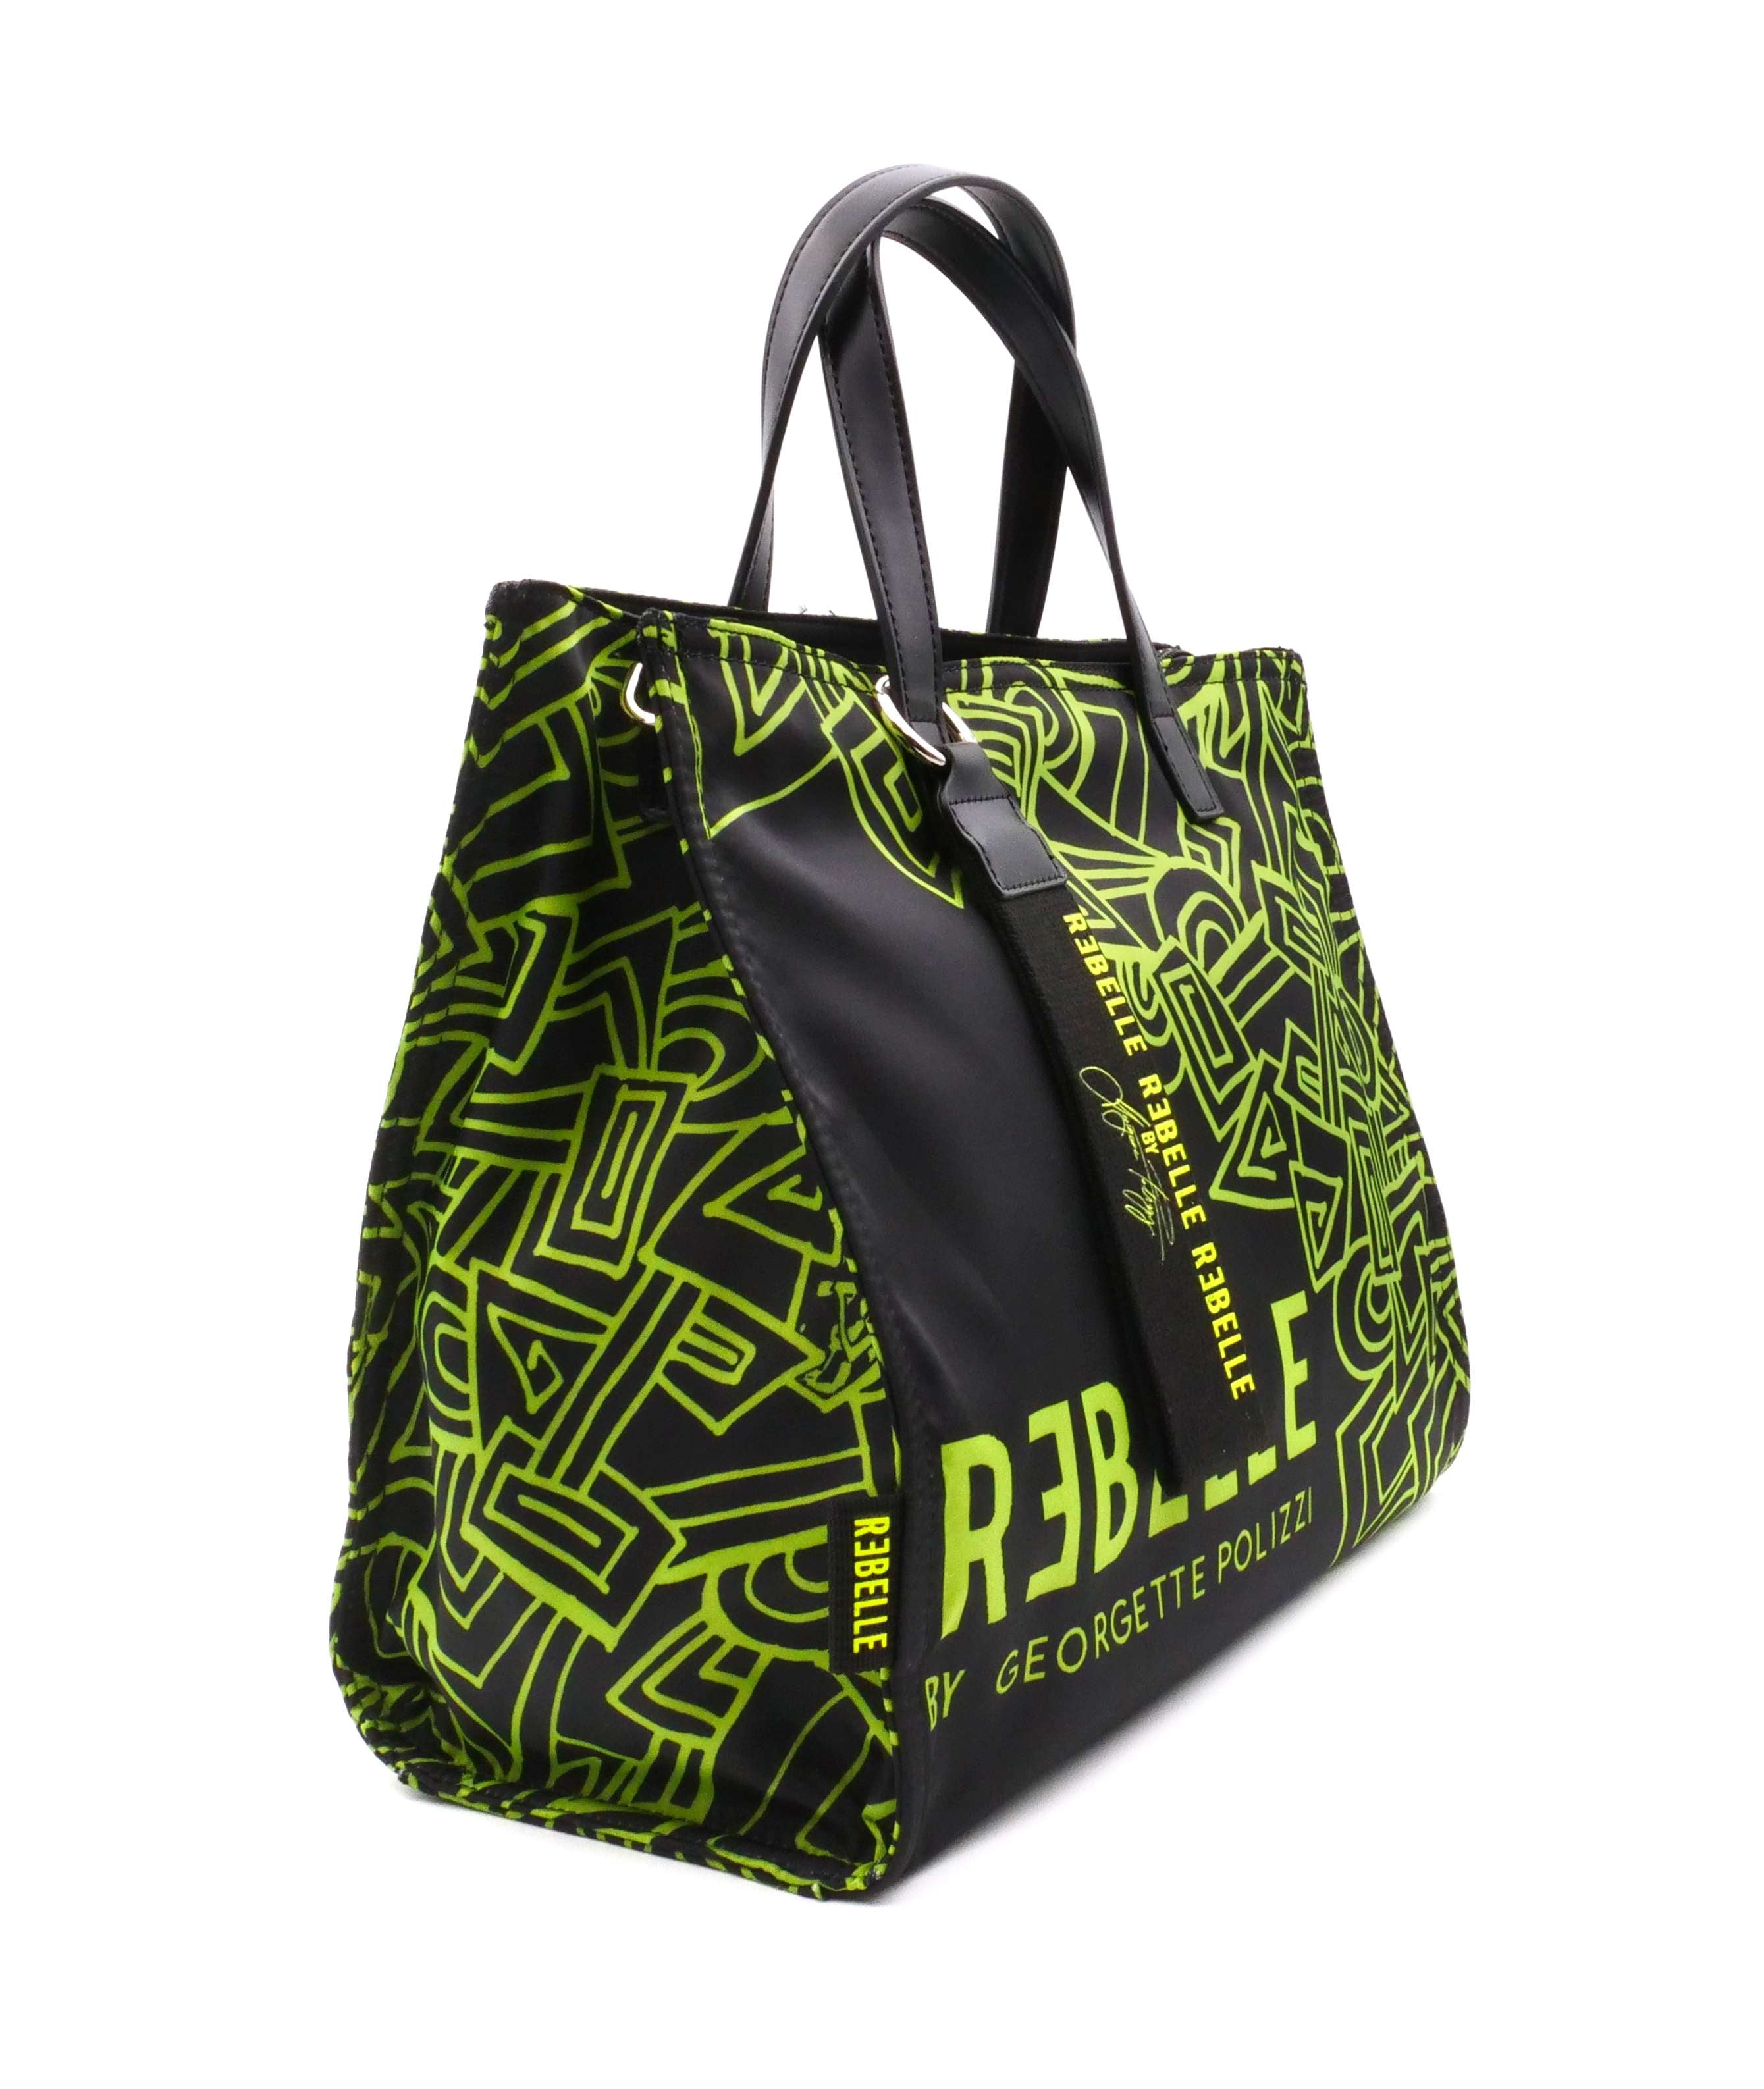 Shopping Bag ELECTRA REBELLE BY GEORGETTE POLIZZI - BLACK - Sergio Fabbri